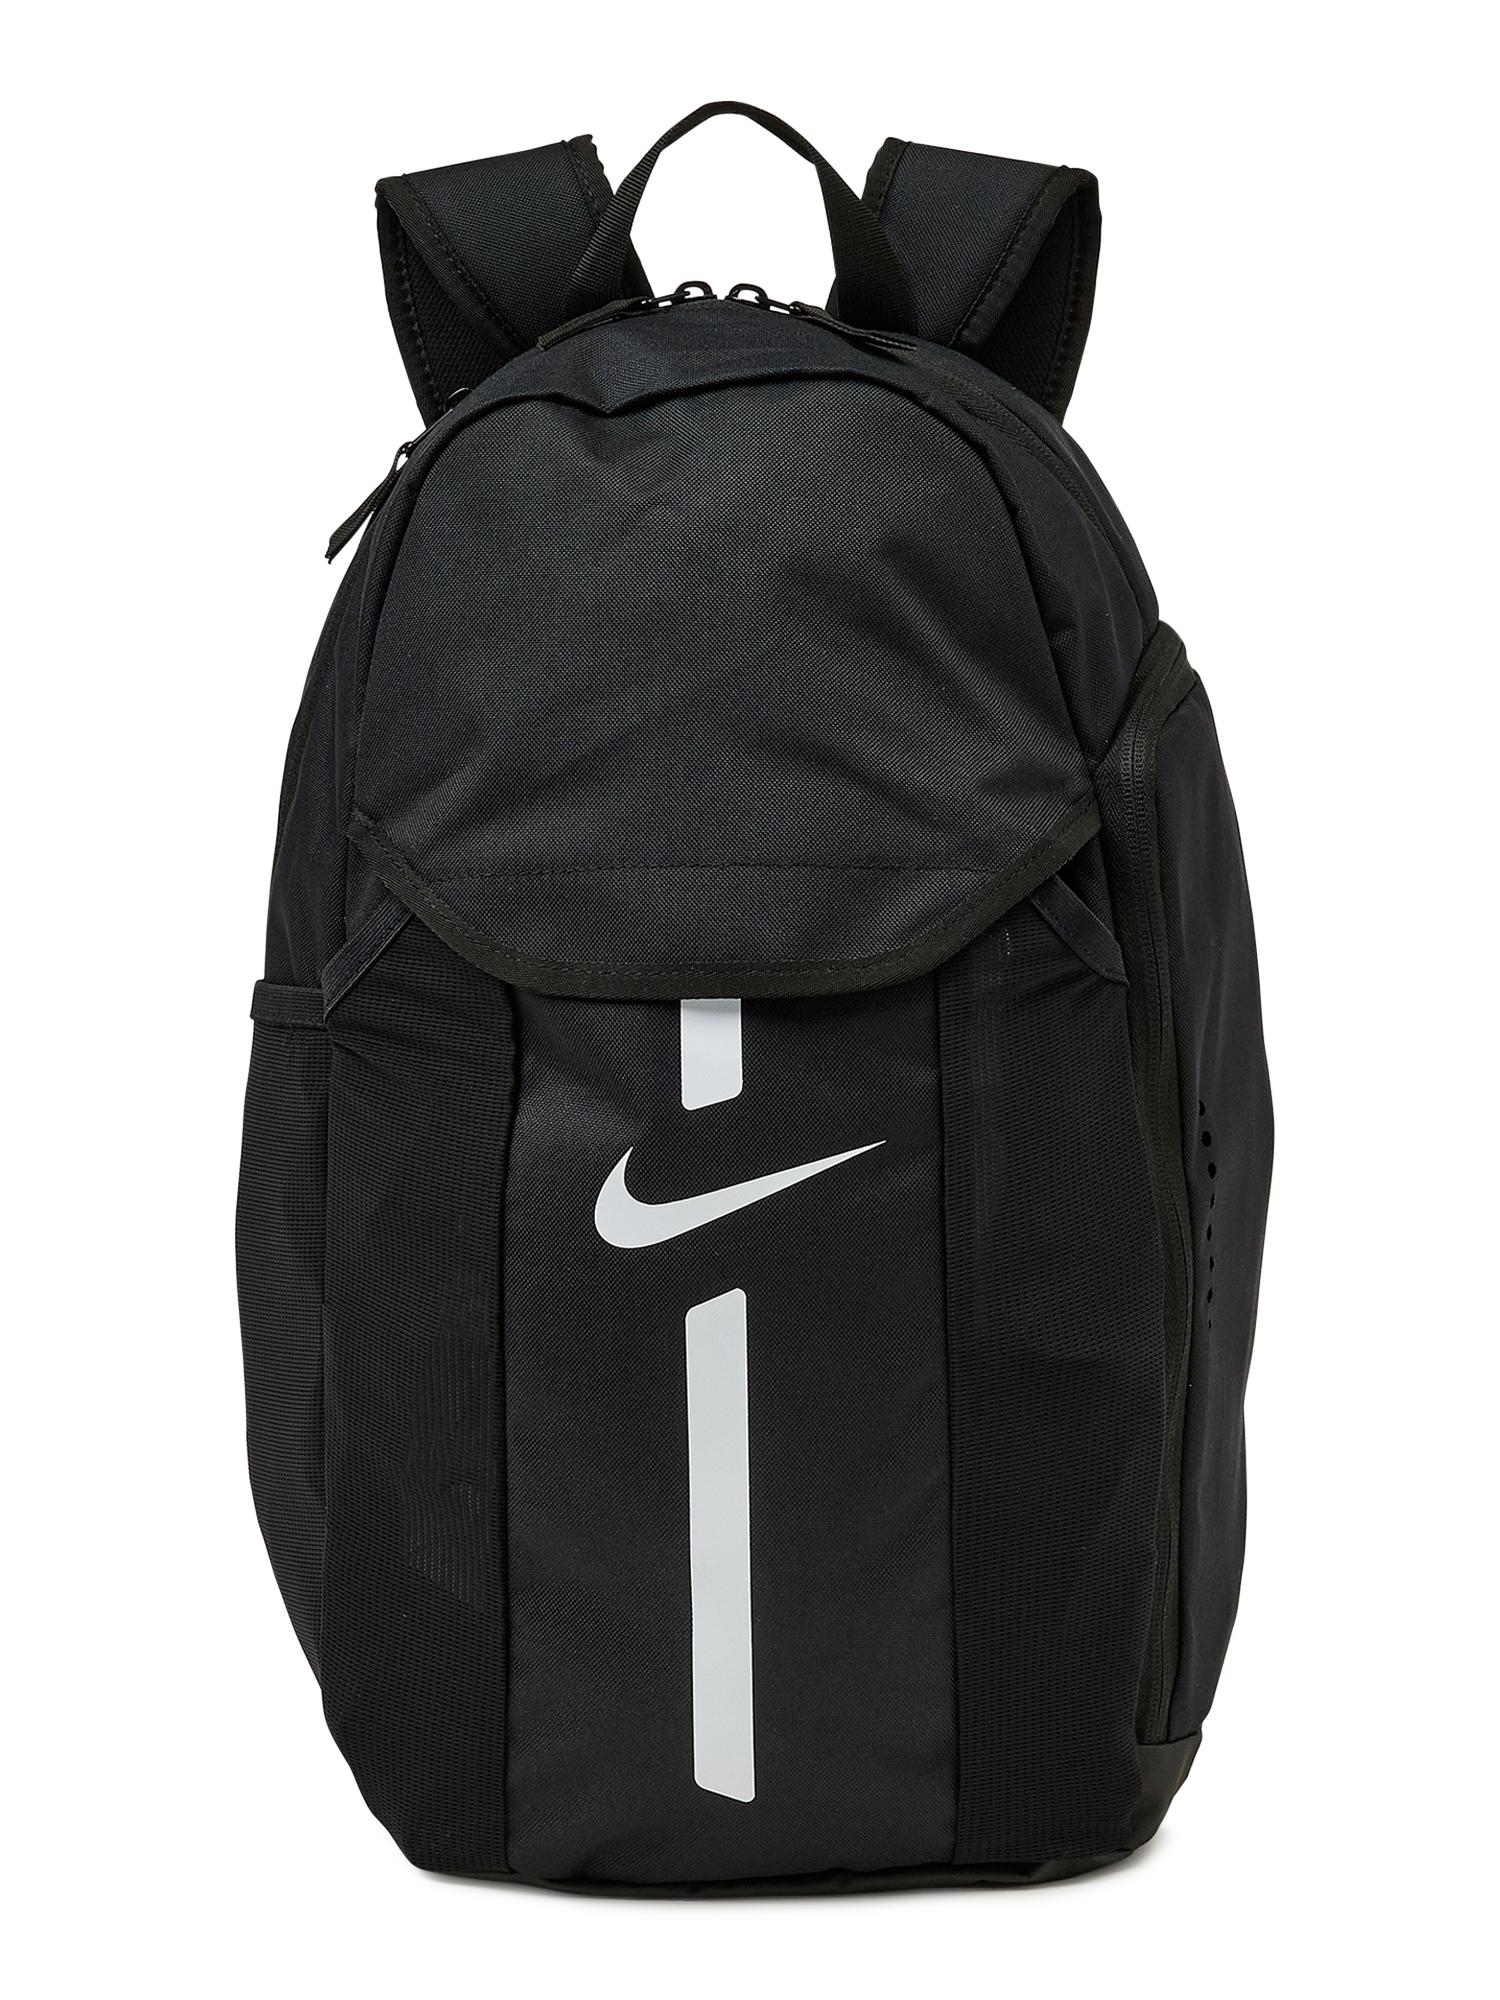 Nike Academy 21 Unisex Black White Backpack - Walmart.com